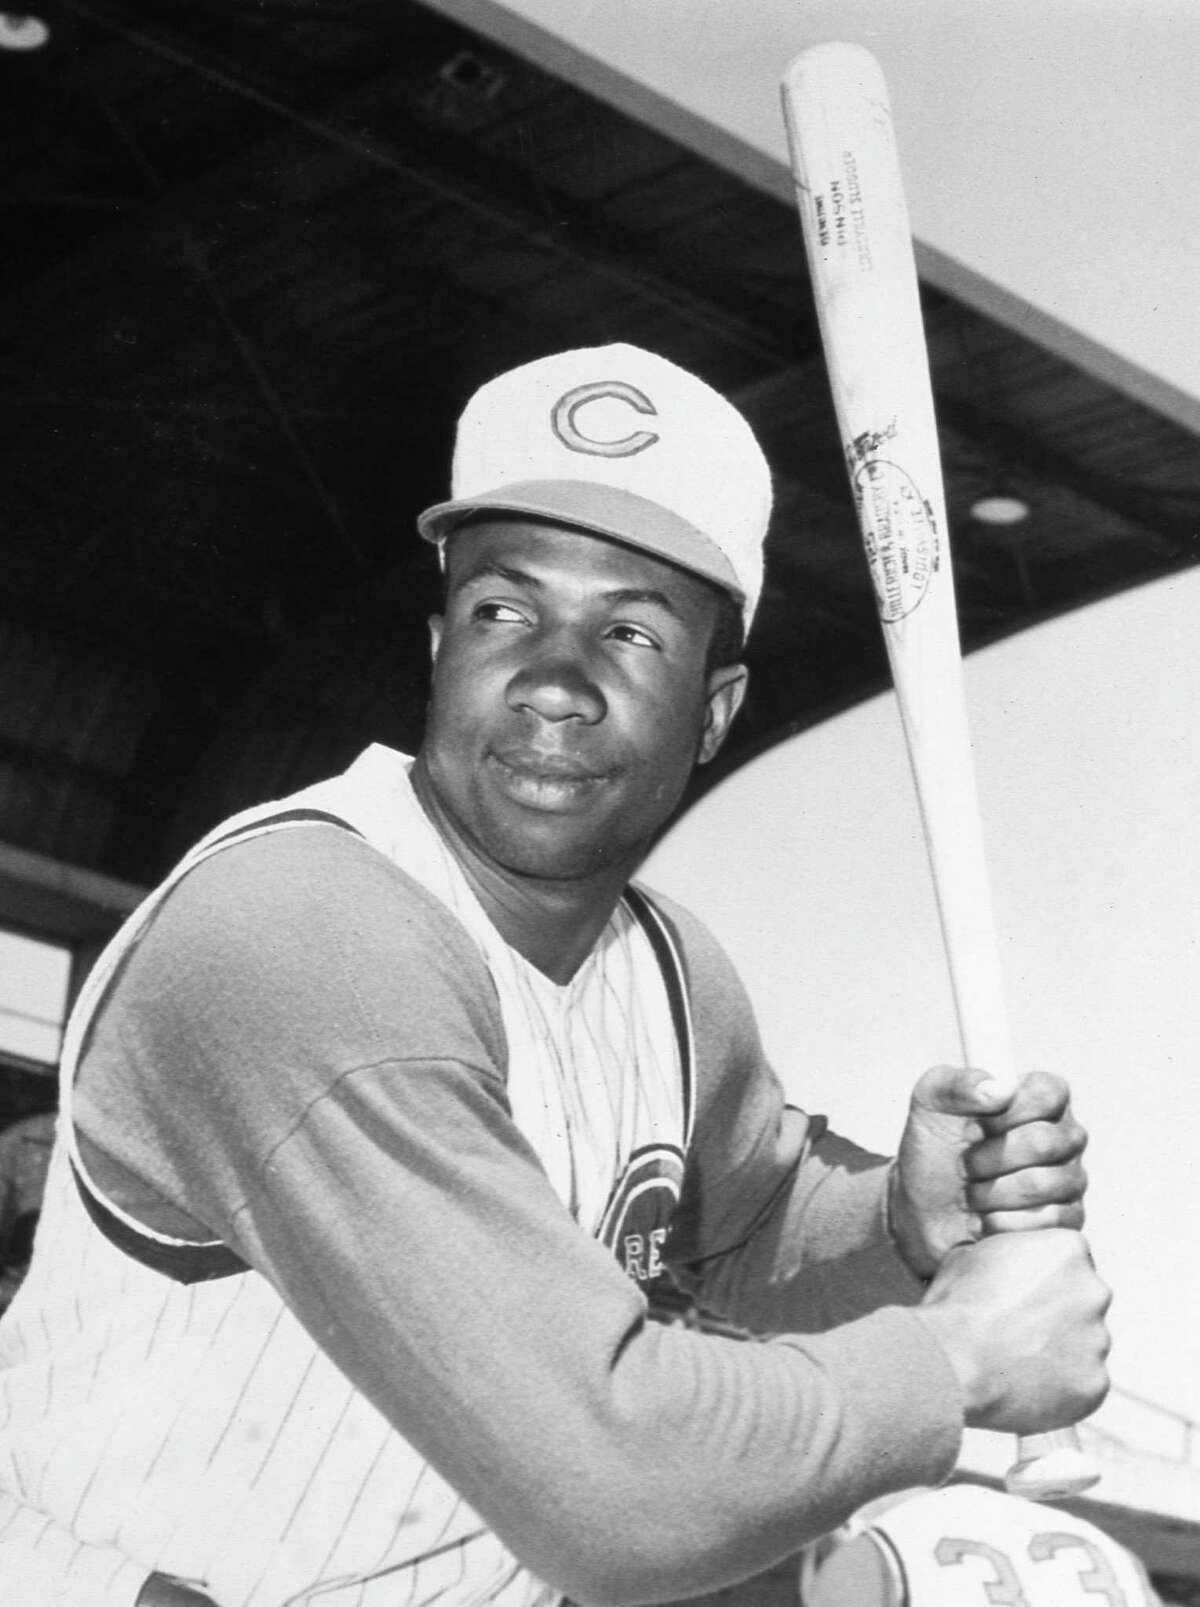 Frank Robinson poses for a batting portrait in Cincinnati about 1960.